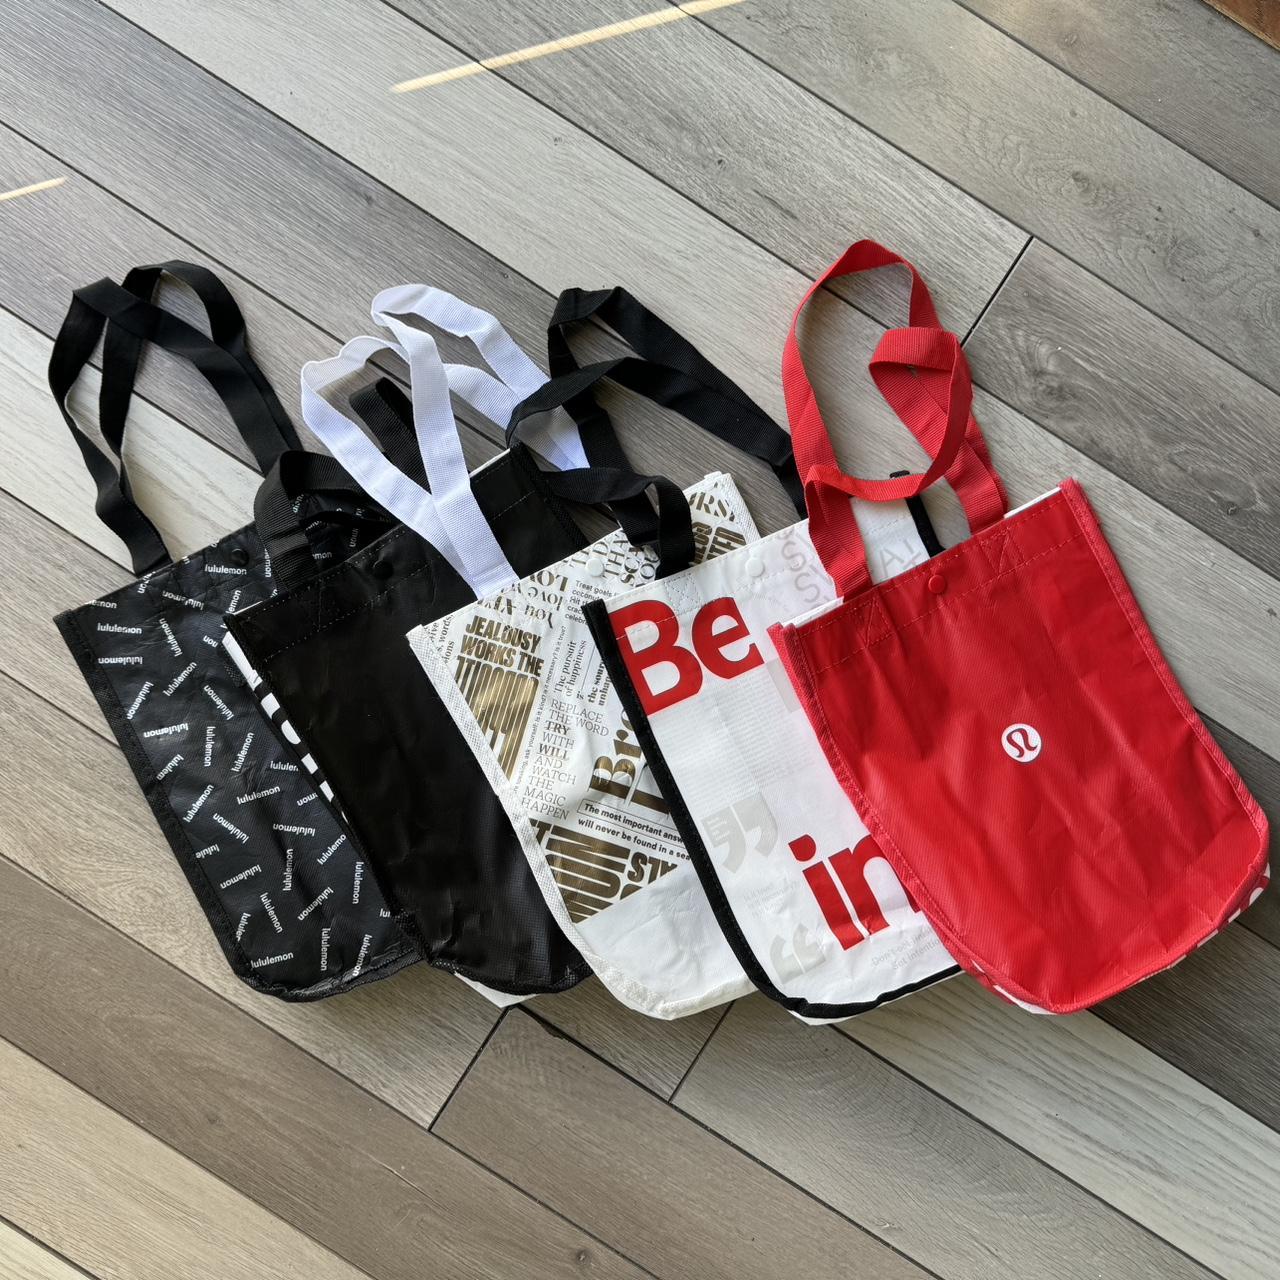 Lululemon store bags , 5 little bags in good